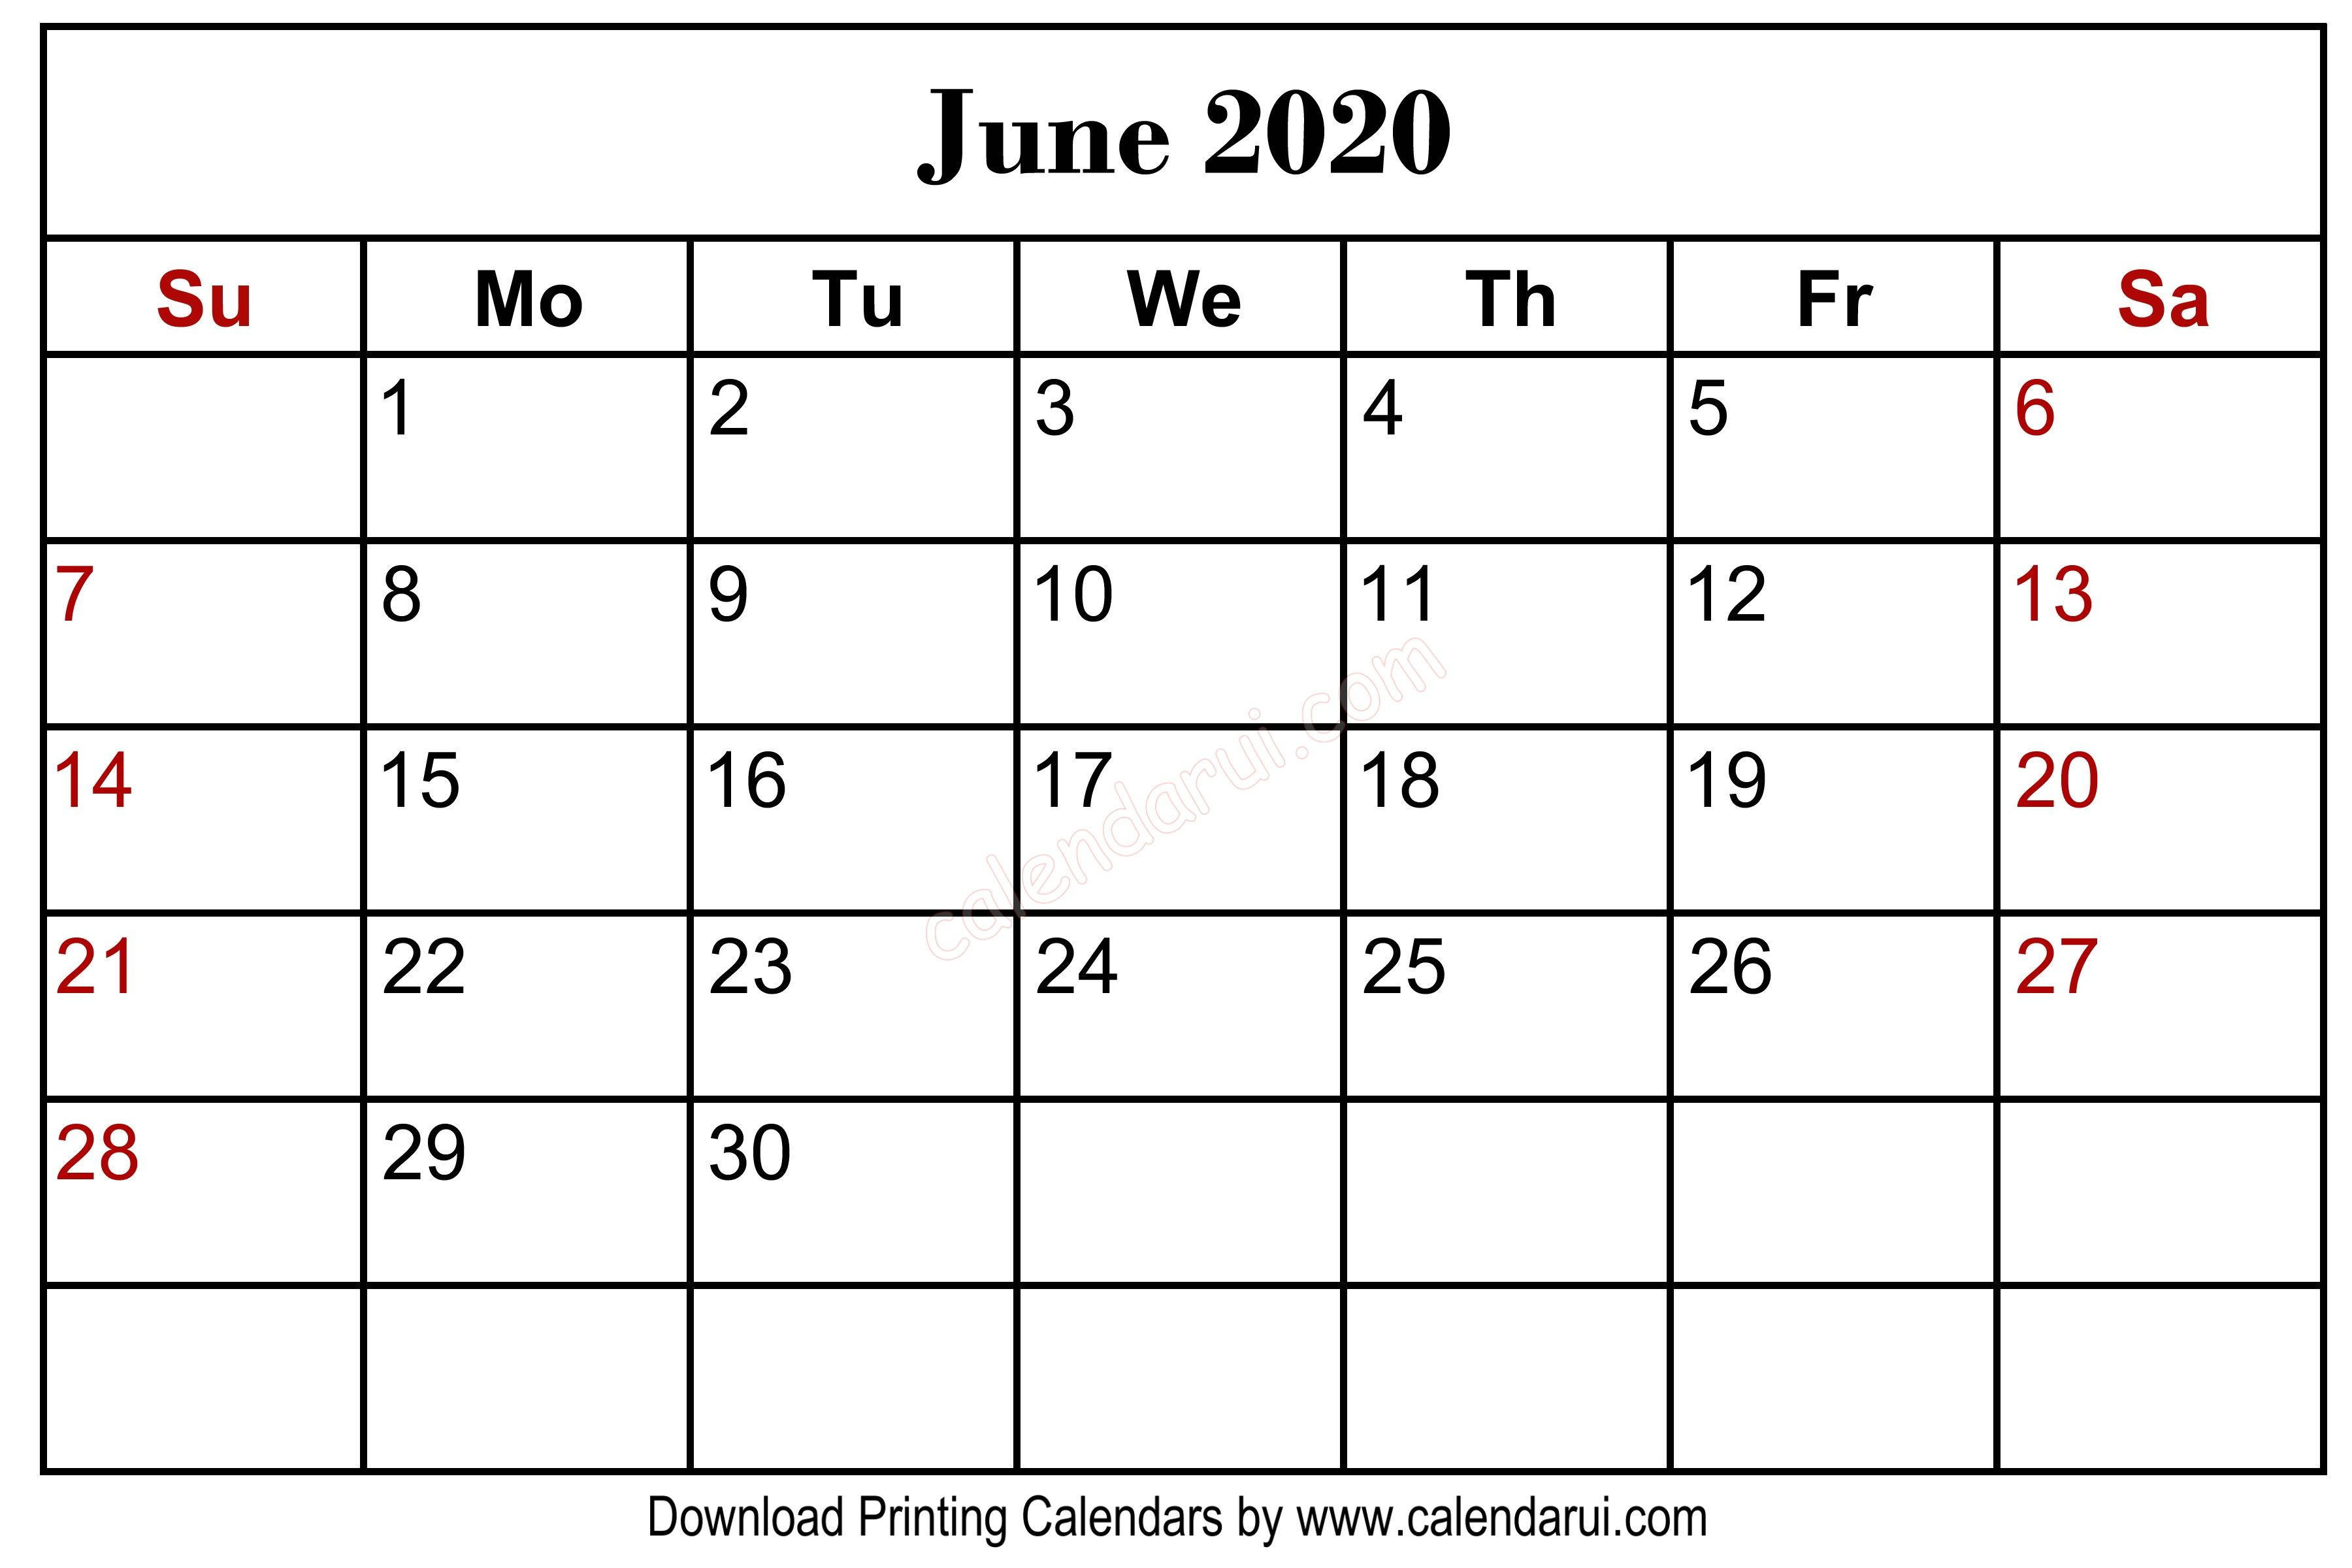 Homepage  2020 Calendar  June 2020 Blank Calendar in Calendars Michel Zbinden 2020